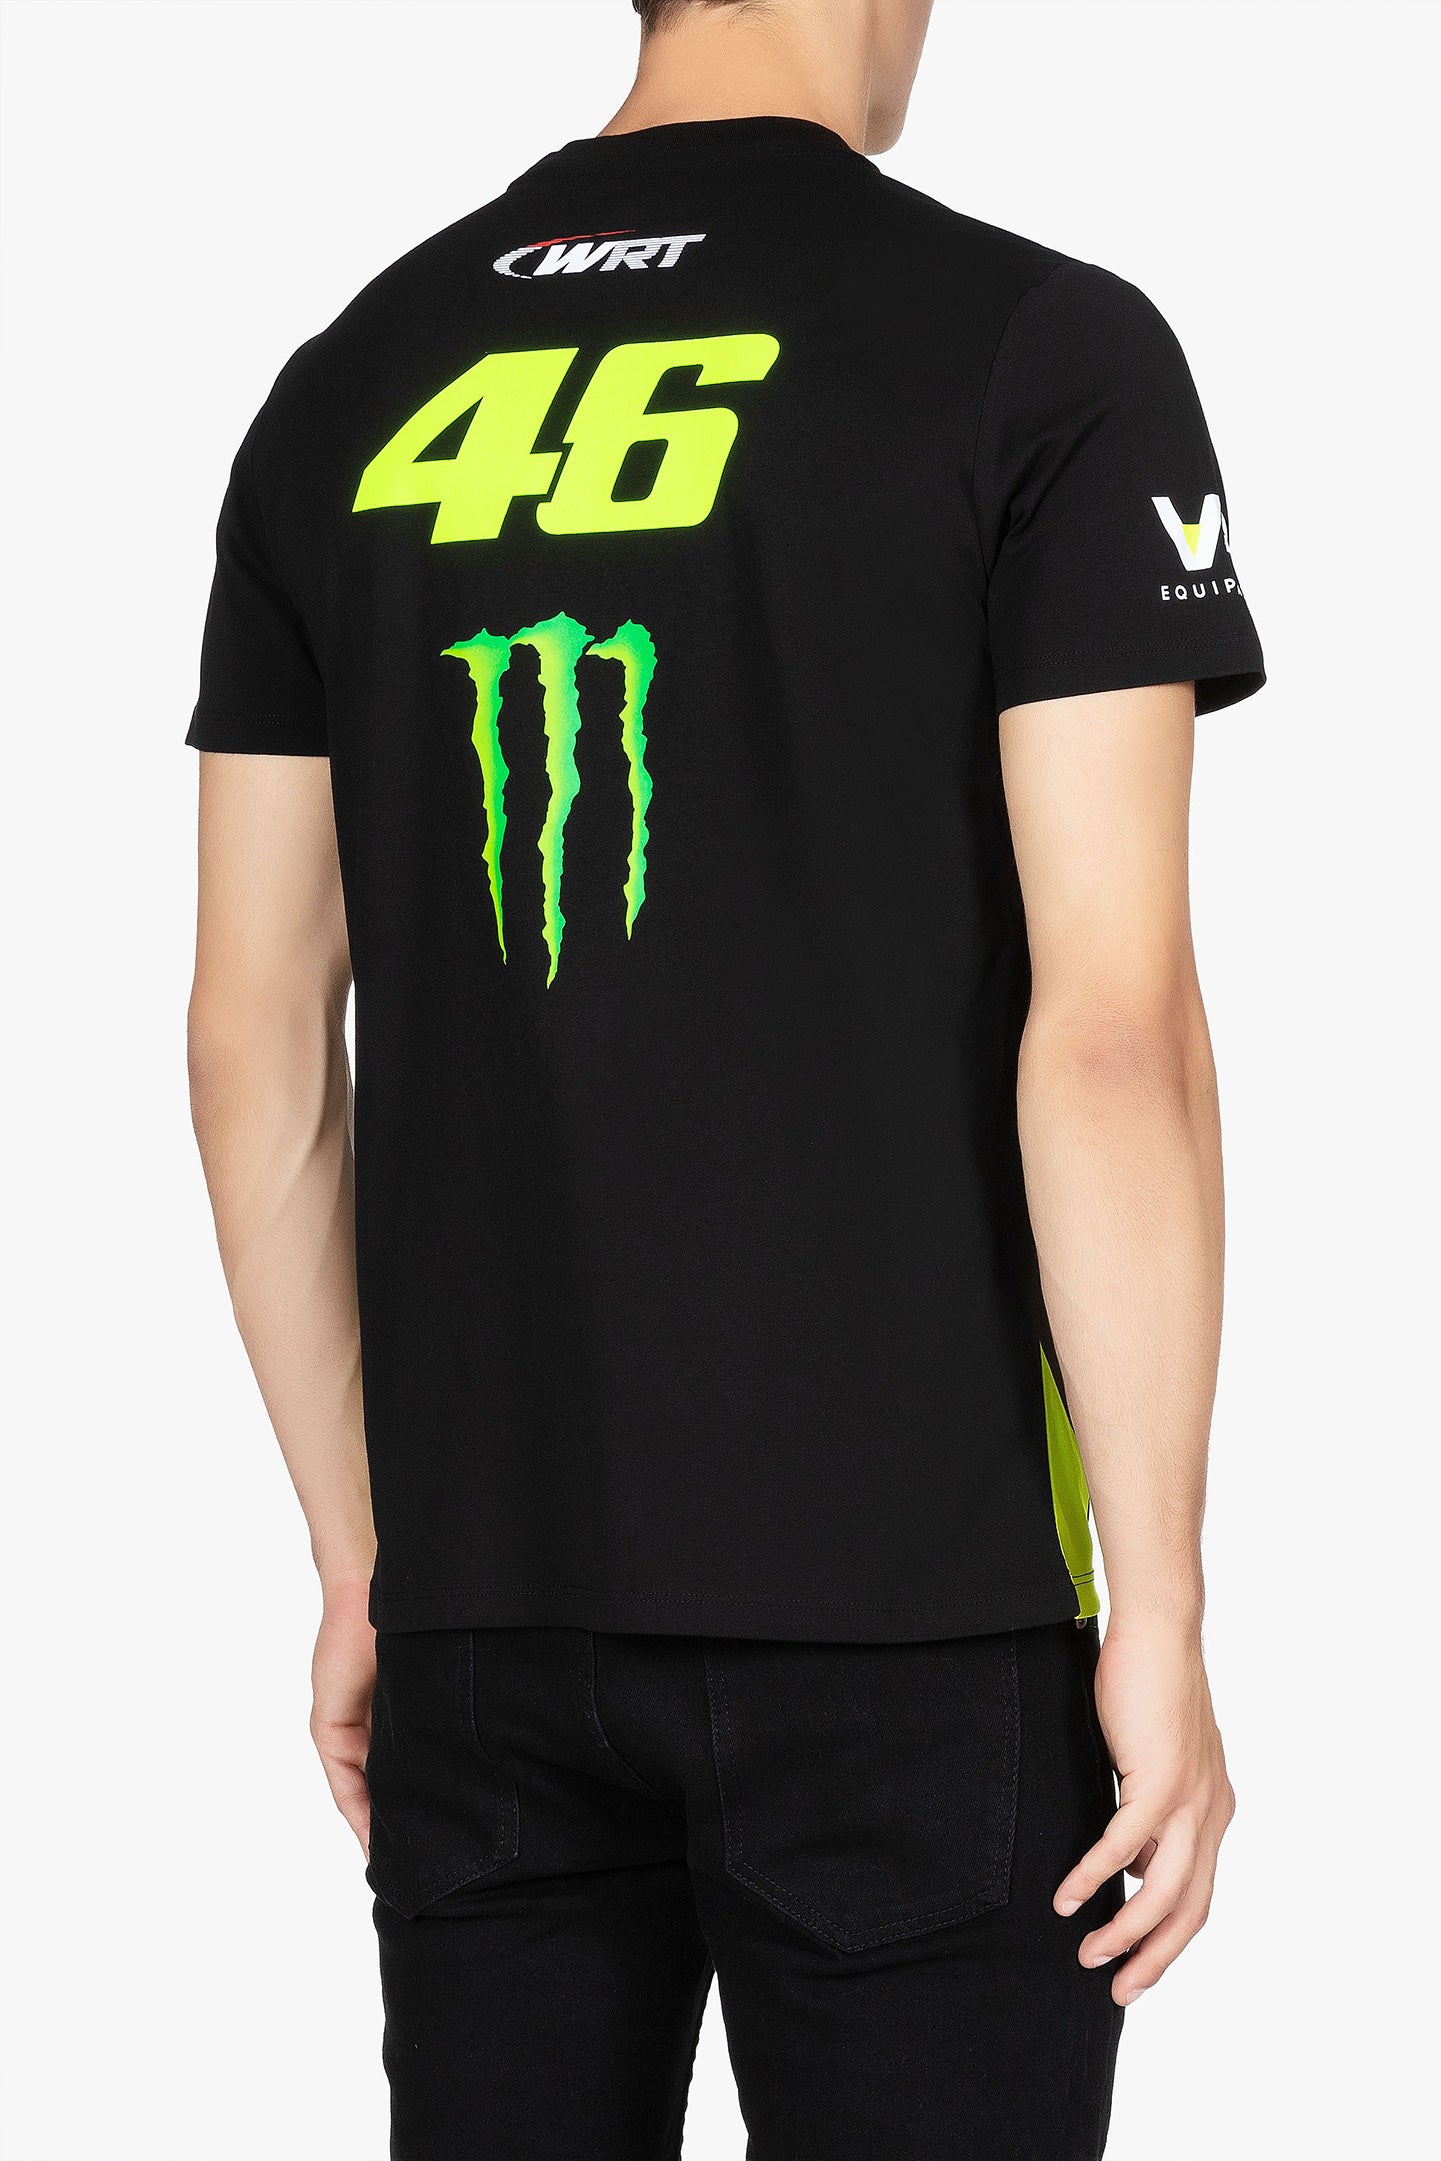 mot omdraaien Geef rechten 46 WRT Monster Energy T-Shirt